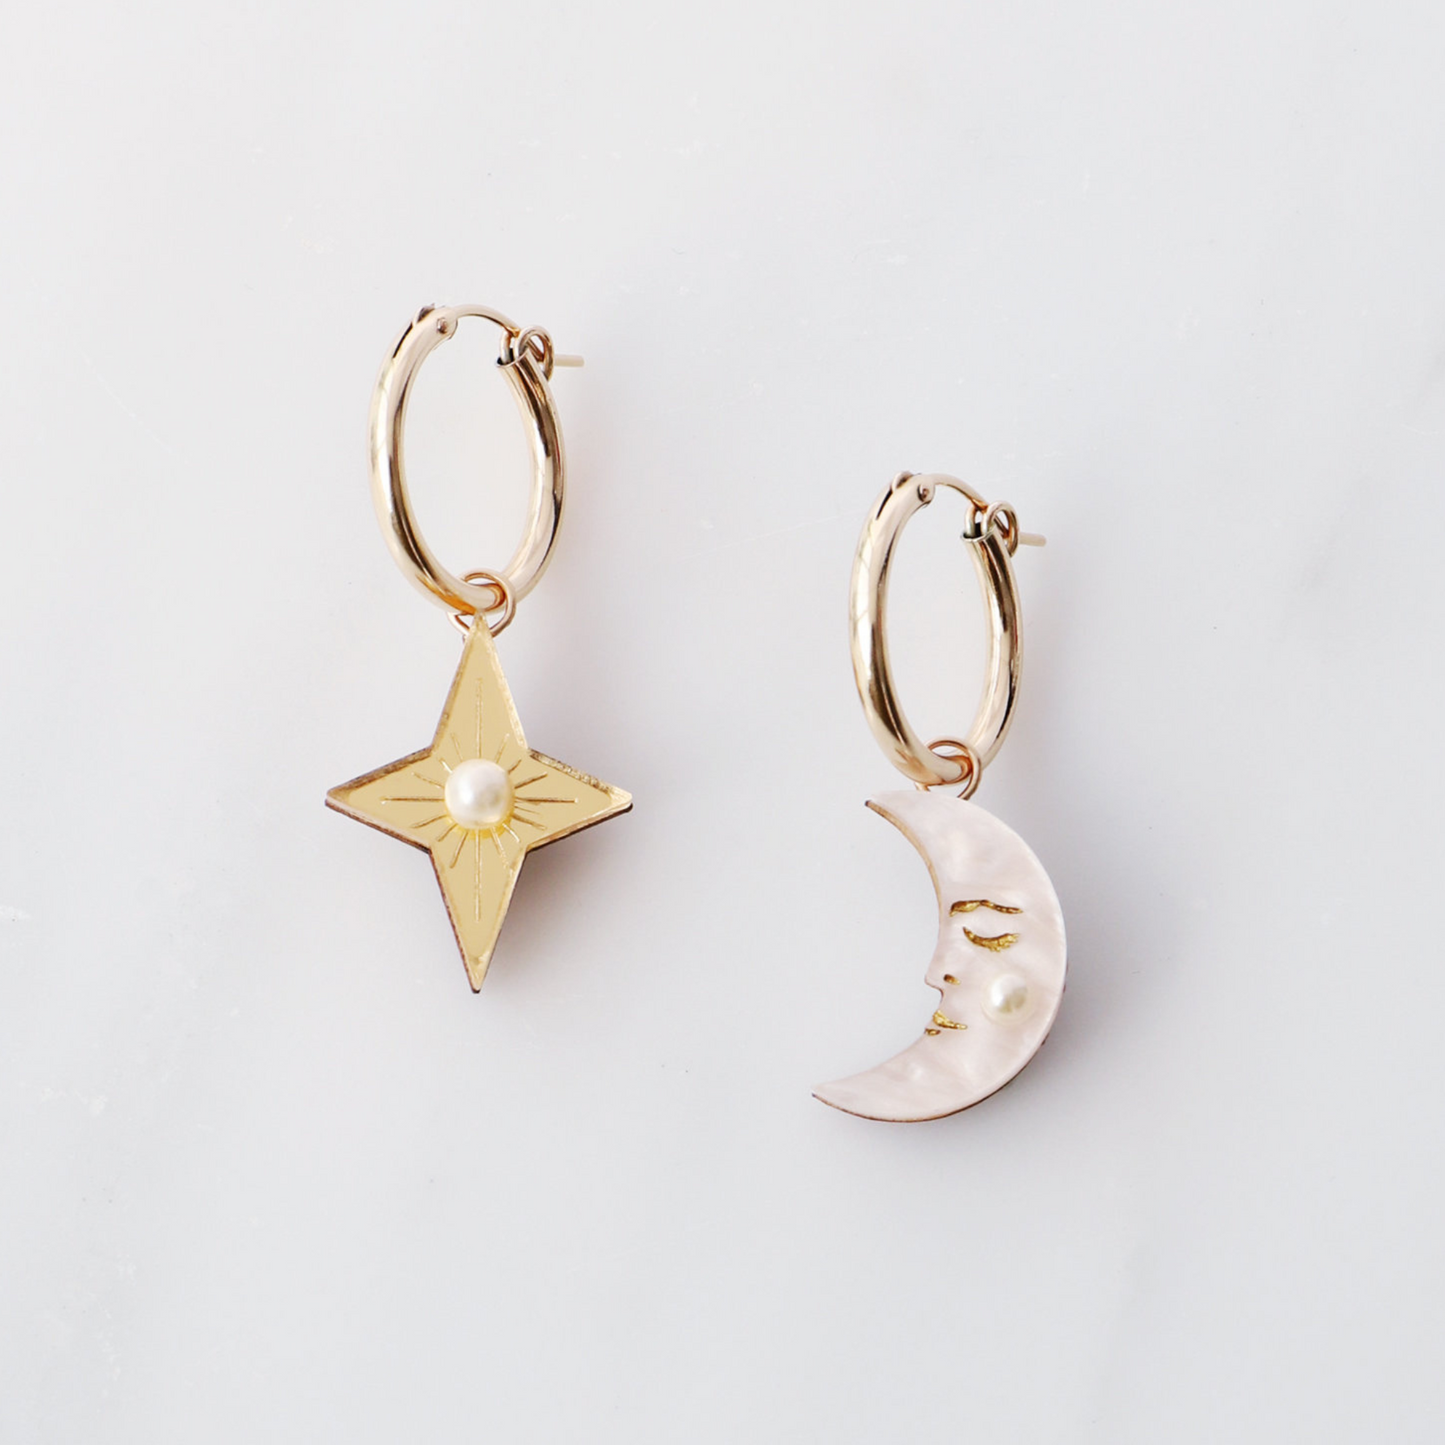 Gold Star Earrings - Buy Gold Star Earrings online in India